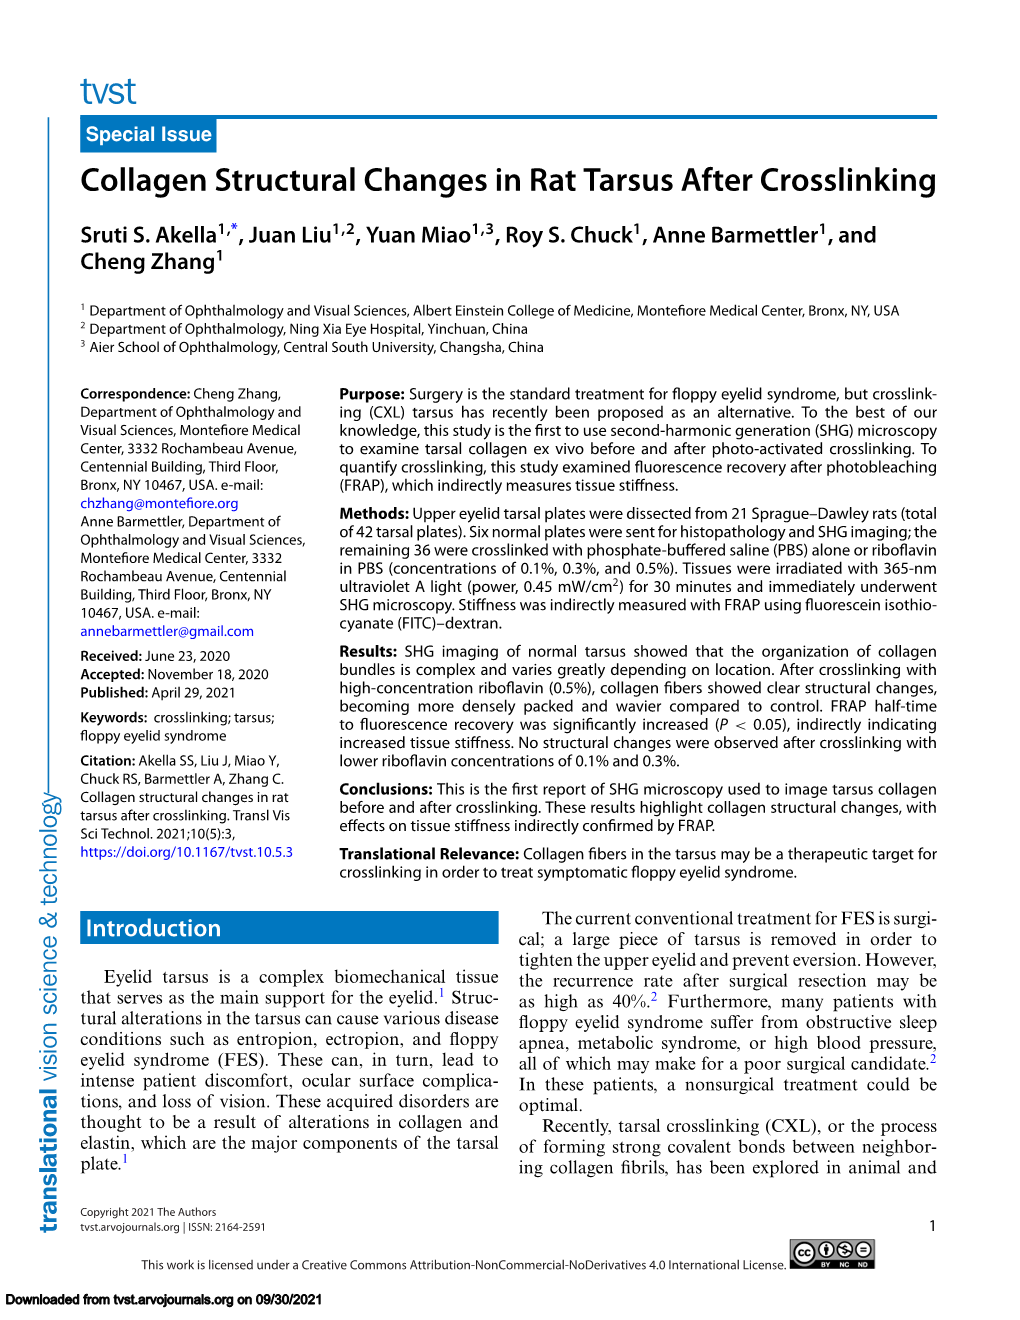 Collagen Structural Changes in Rat Tarsus After Crosslinking